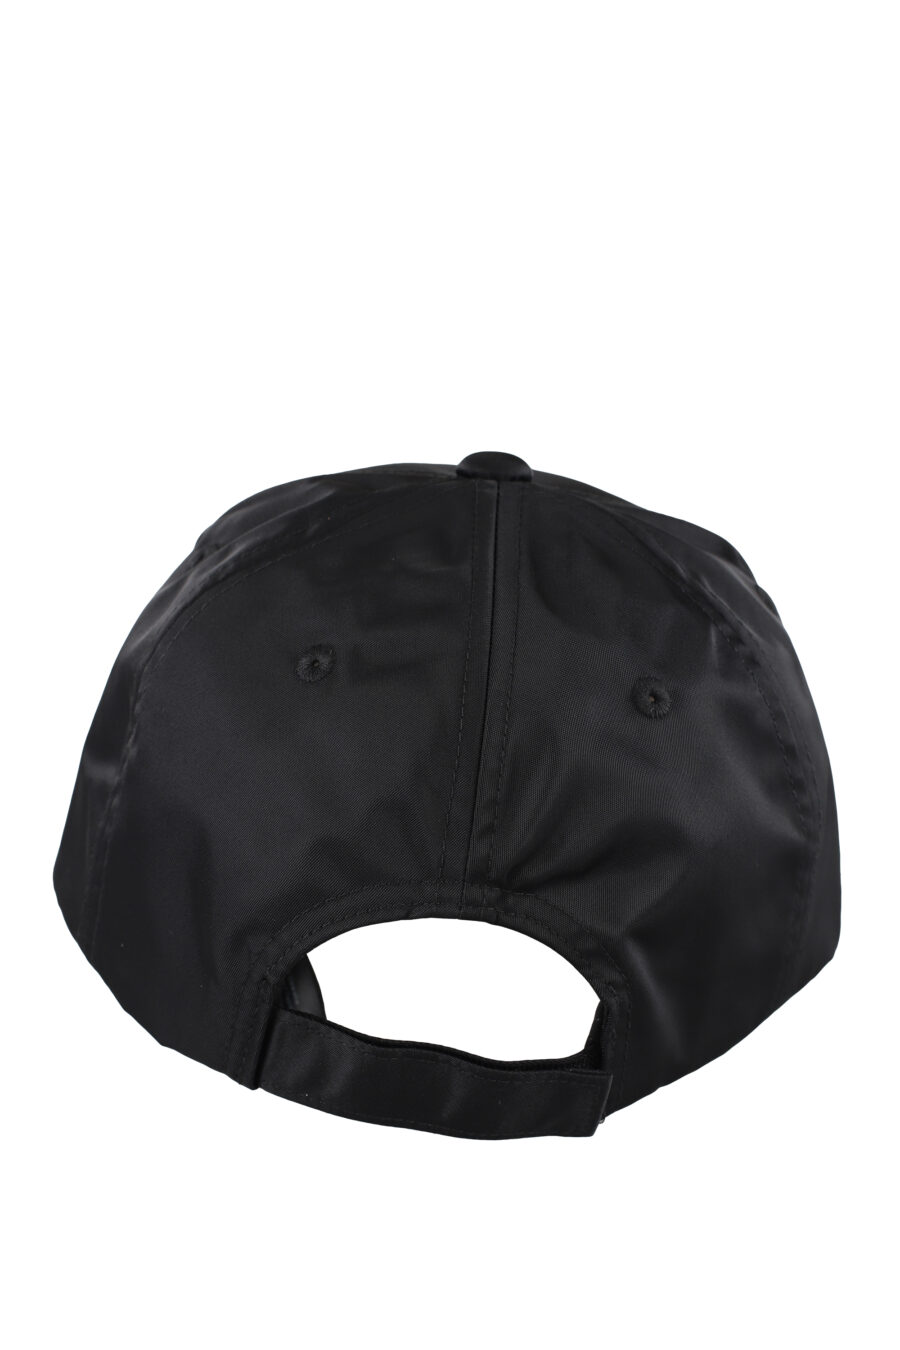 Schwarze Kappe mit Metalladler-Logo - IMG 5179